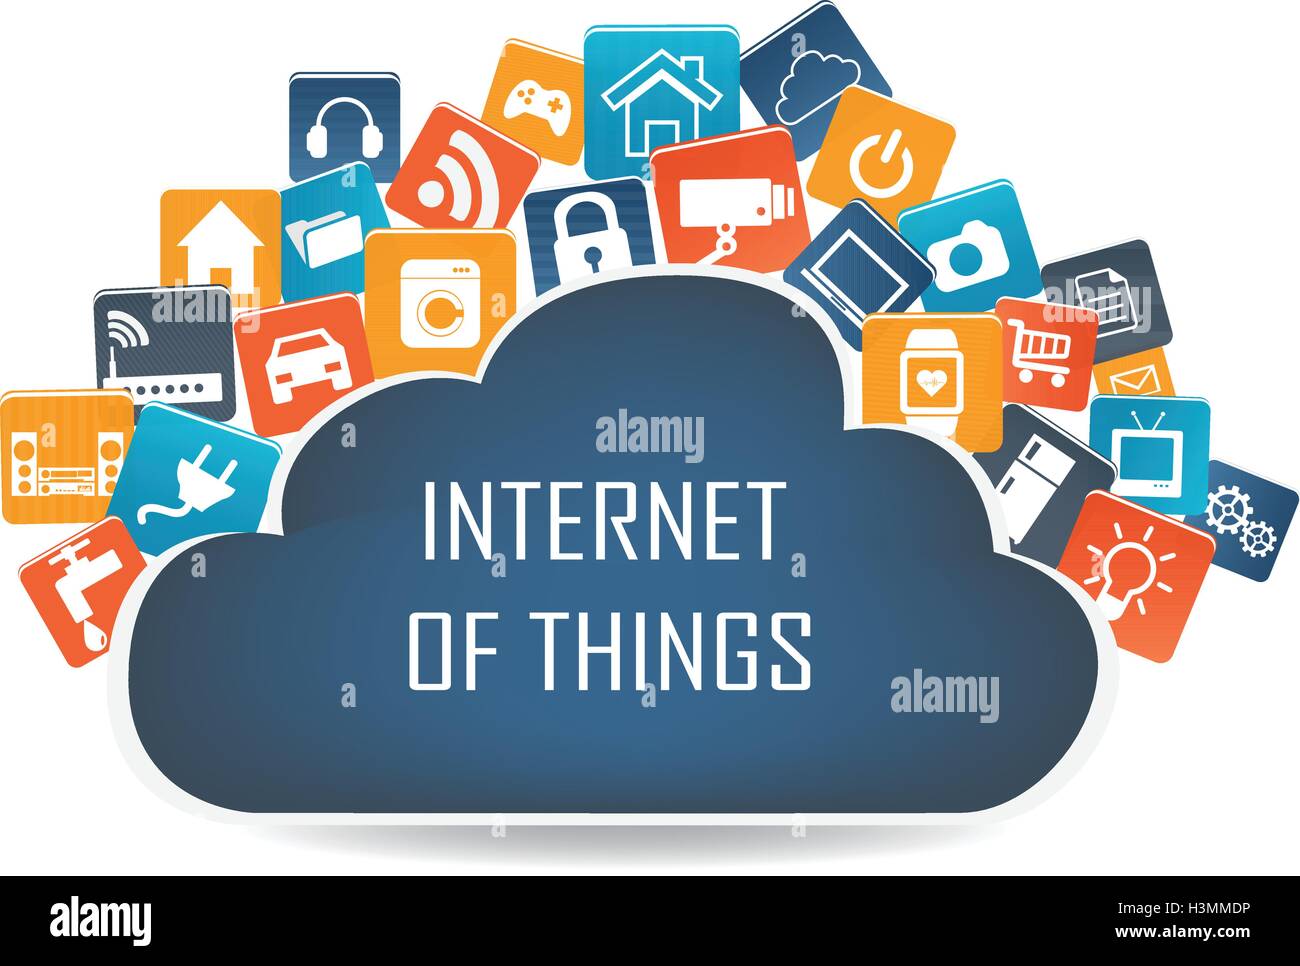 Internet der Dinge-Konzept und Cloud computing Technologie Smart Home Technologie Internet-Networking-Konzept. Internet der Dinge Stock Vektor